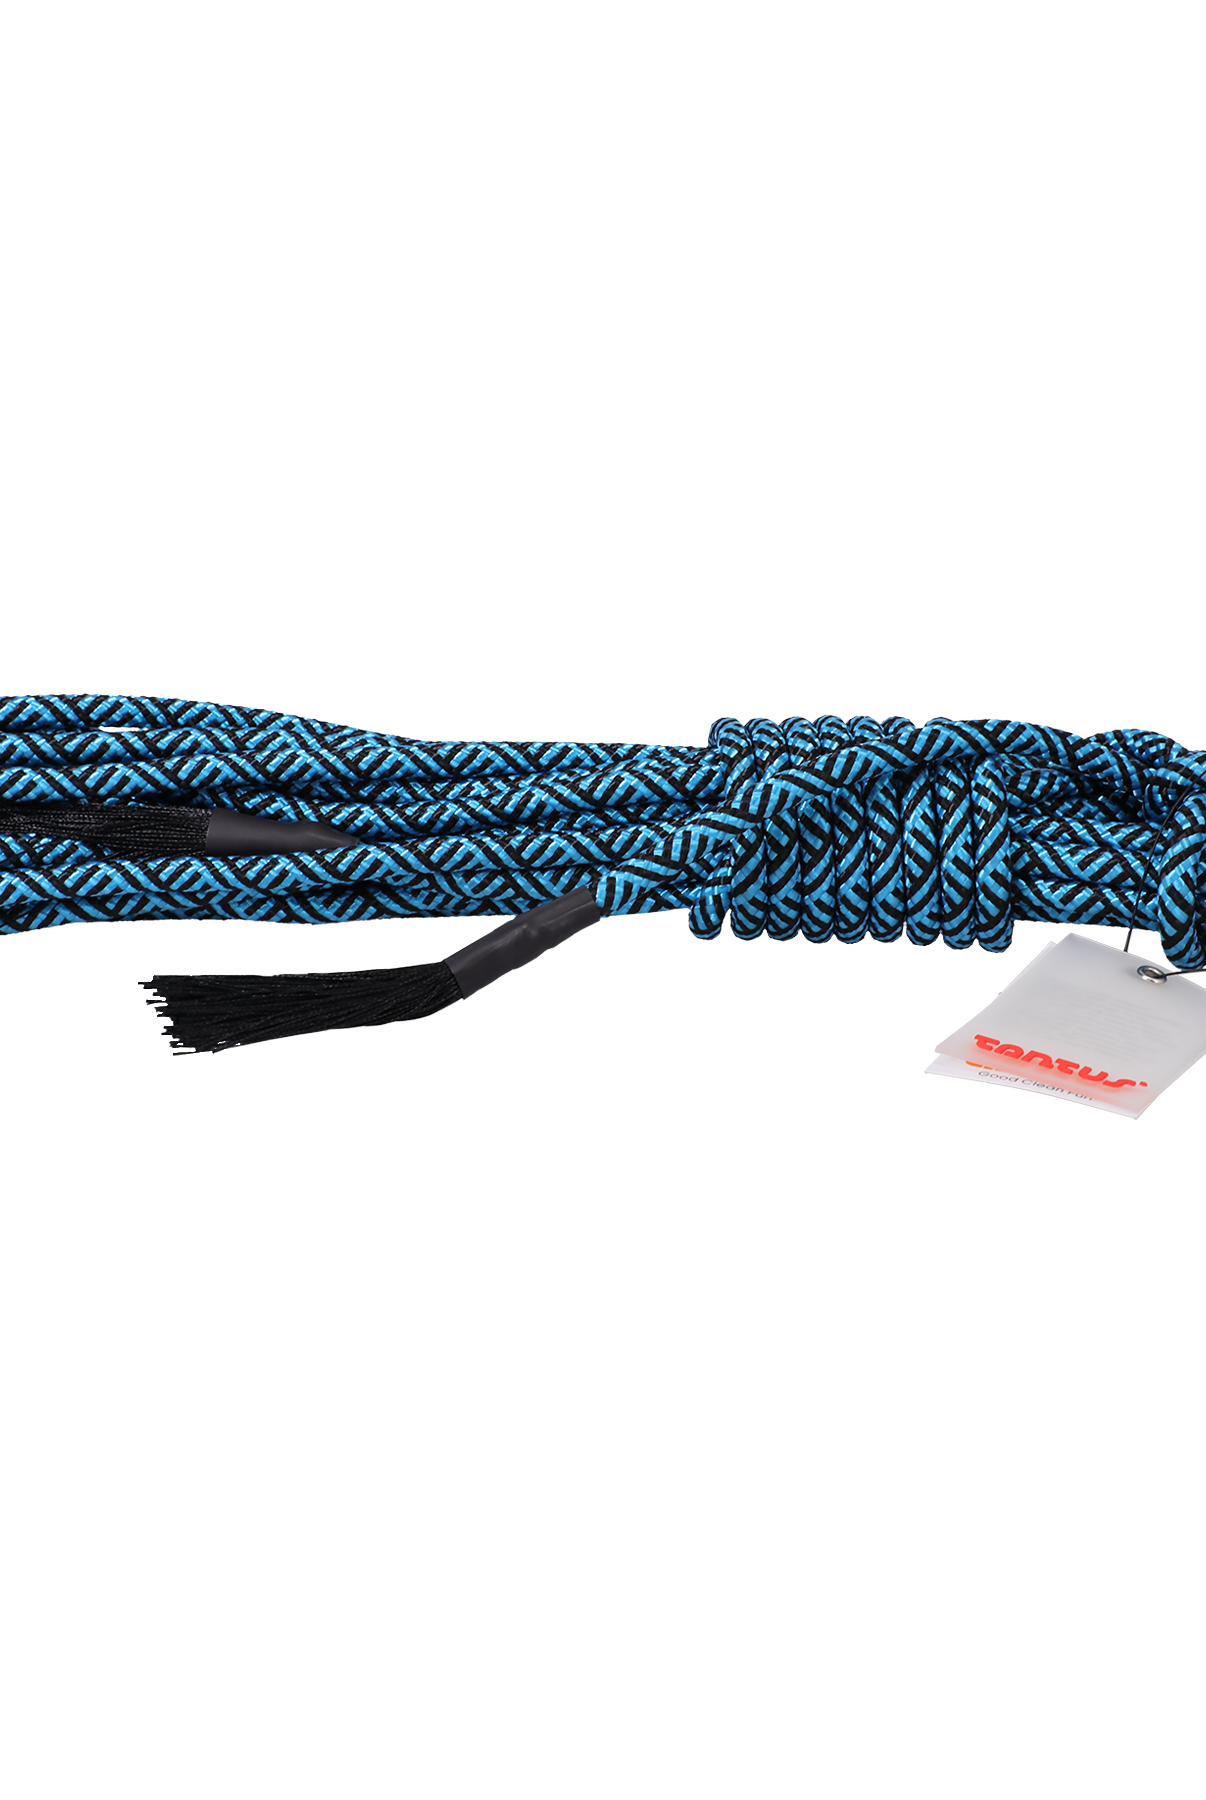 Rope - 30 Feet - Azure, Onyx - ACME Pleasure